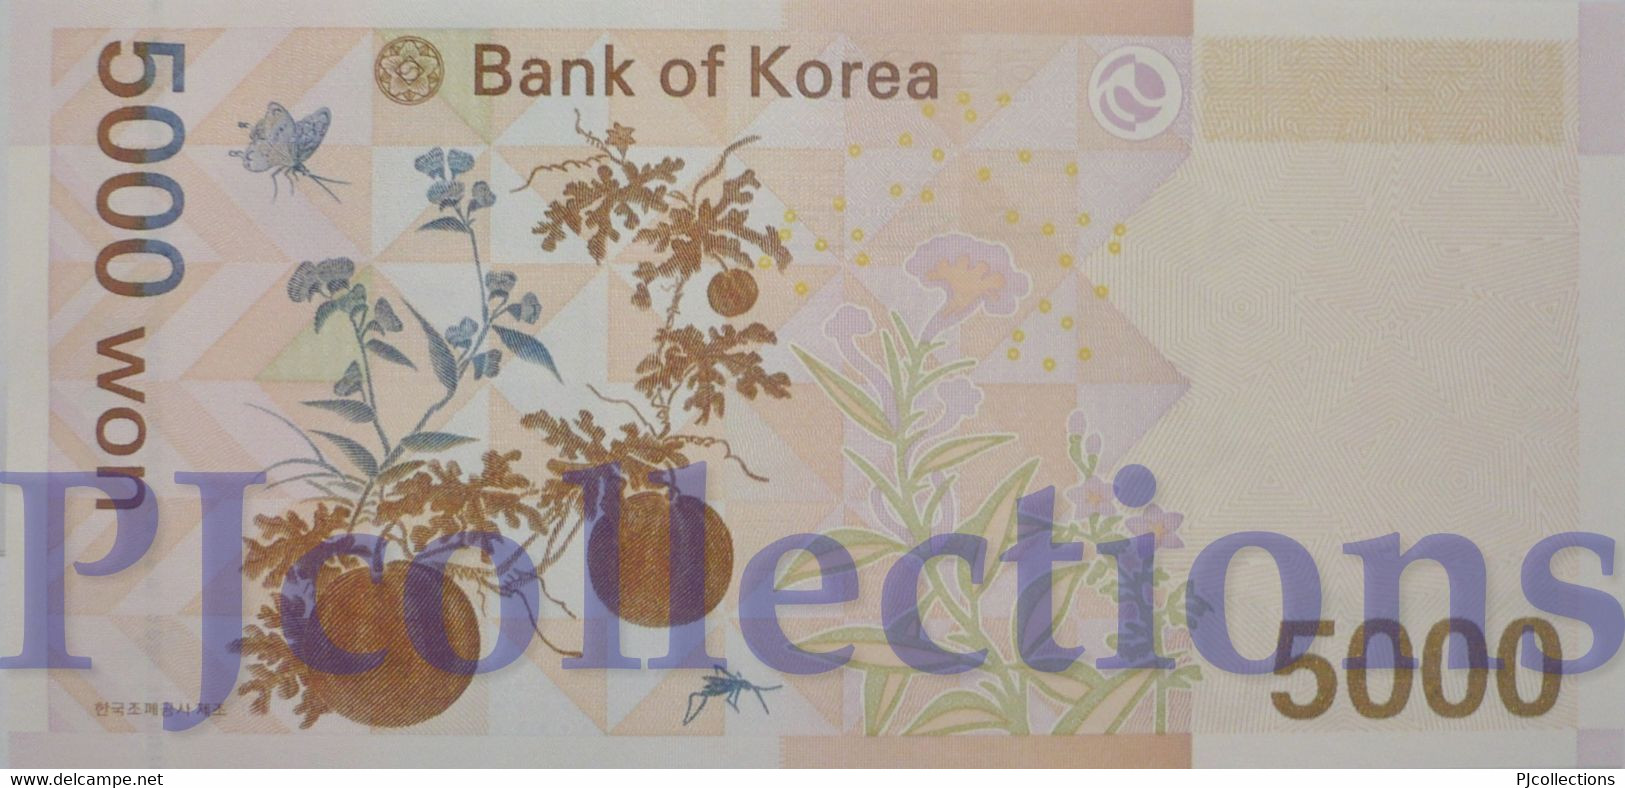 SOUTH KOREA 5000 WON 2006 PICK 55 UNC - Korea, South